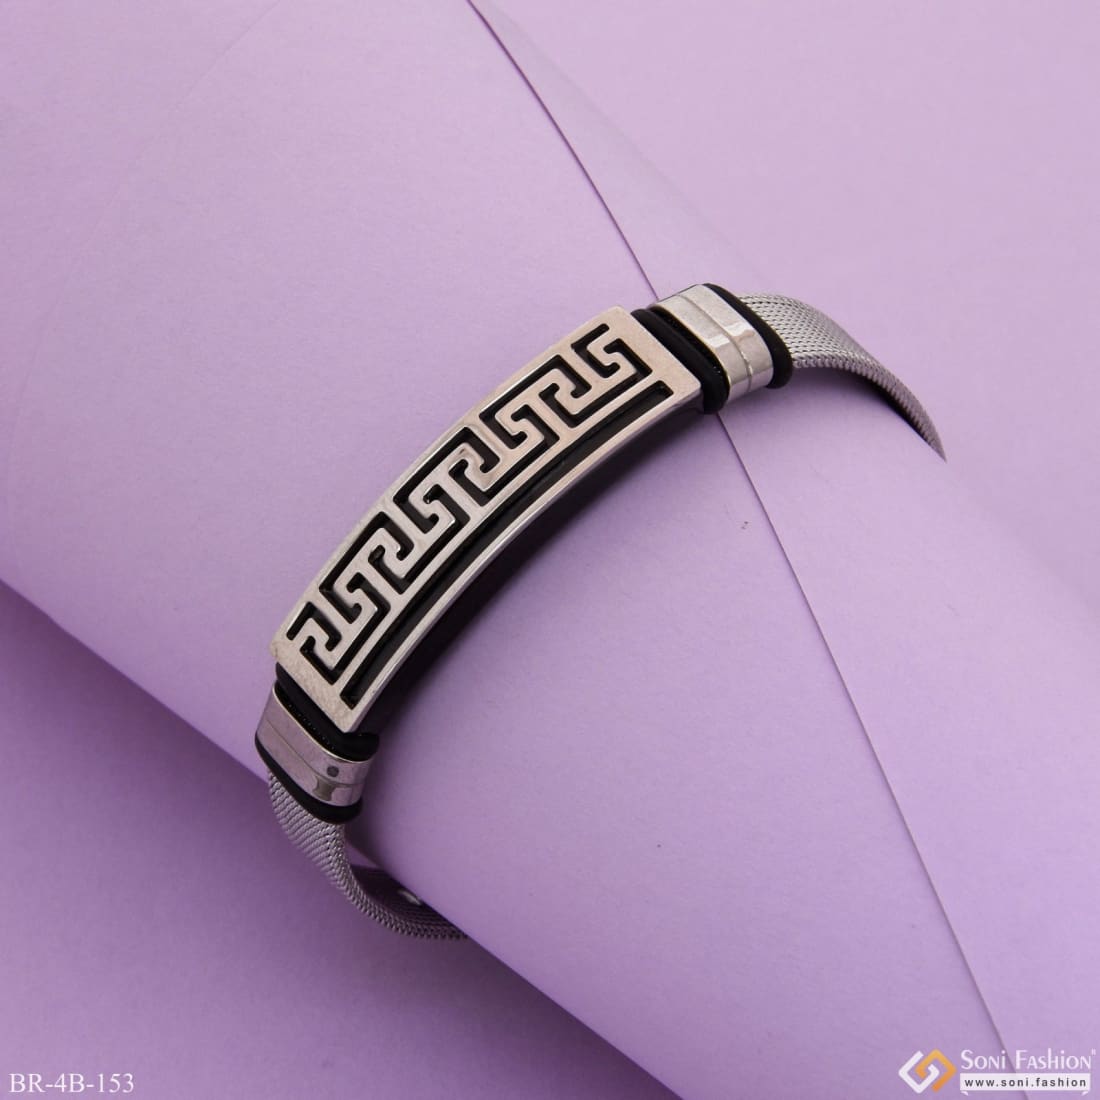 My Daily Styles Womens Stainless Steel Greek Key Cuff Bracelet (Silver) -  Walmart.com